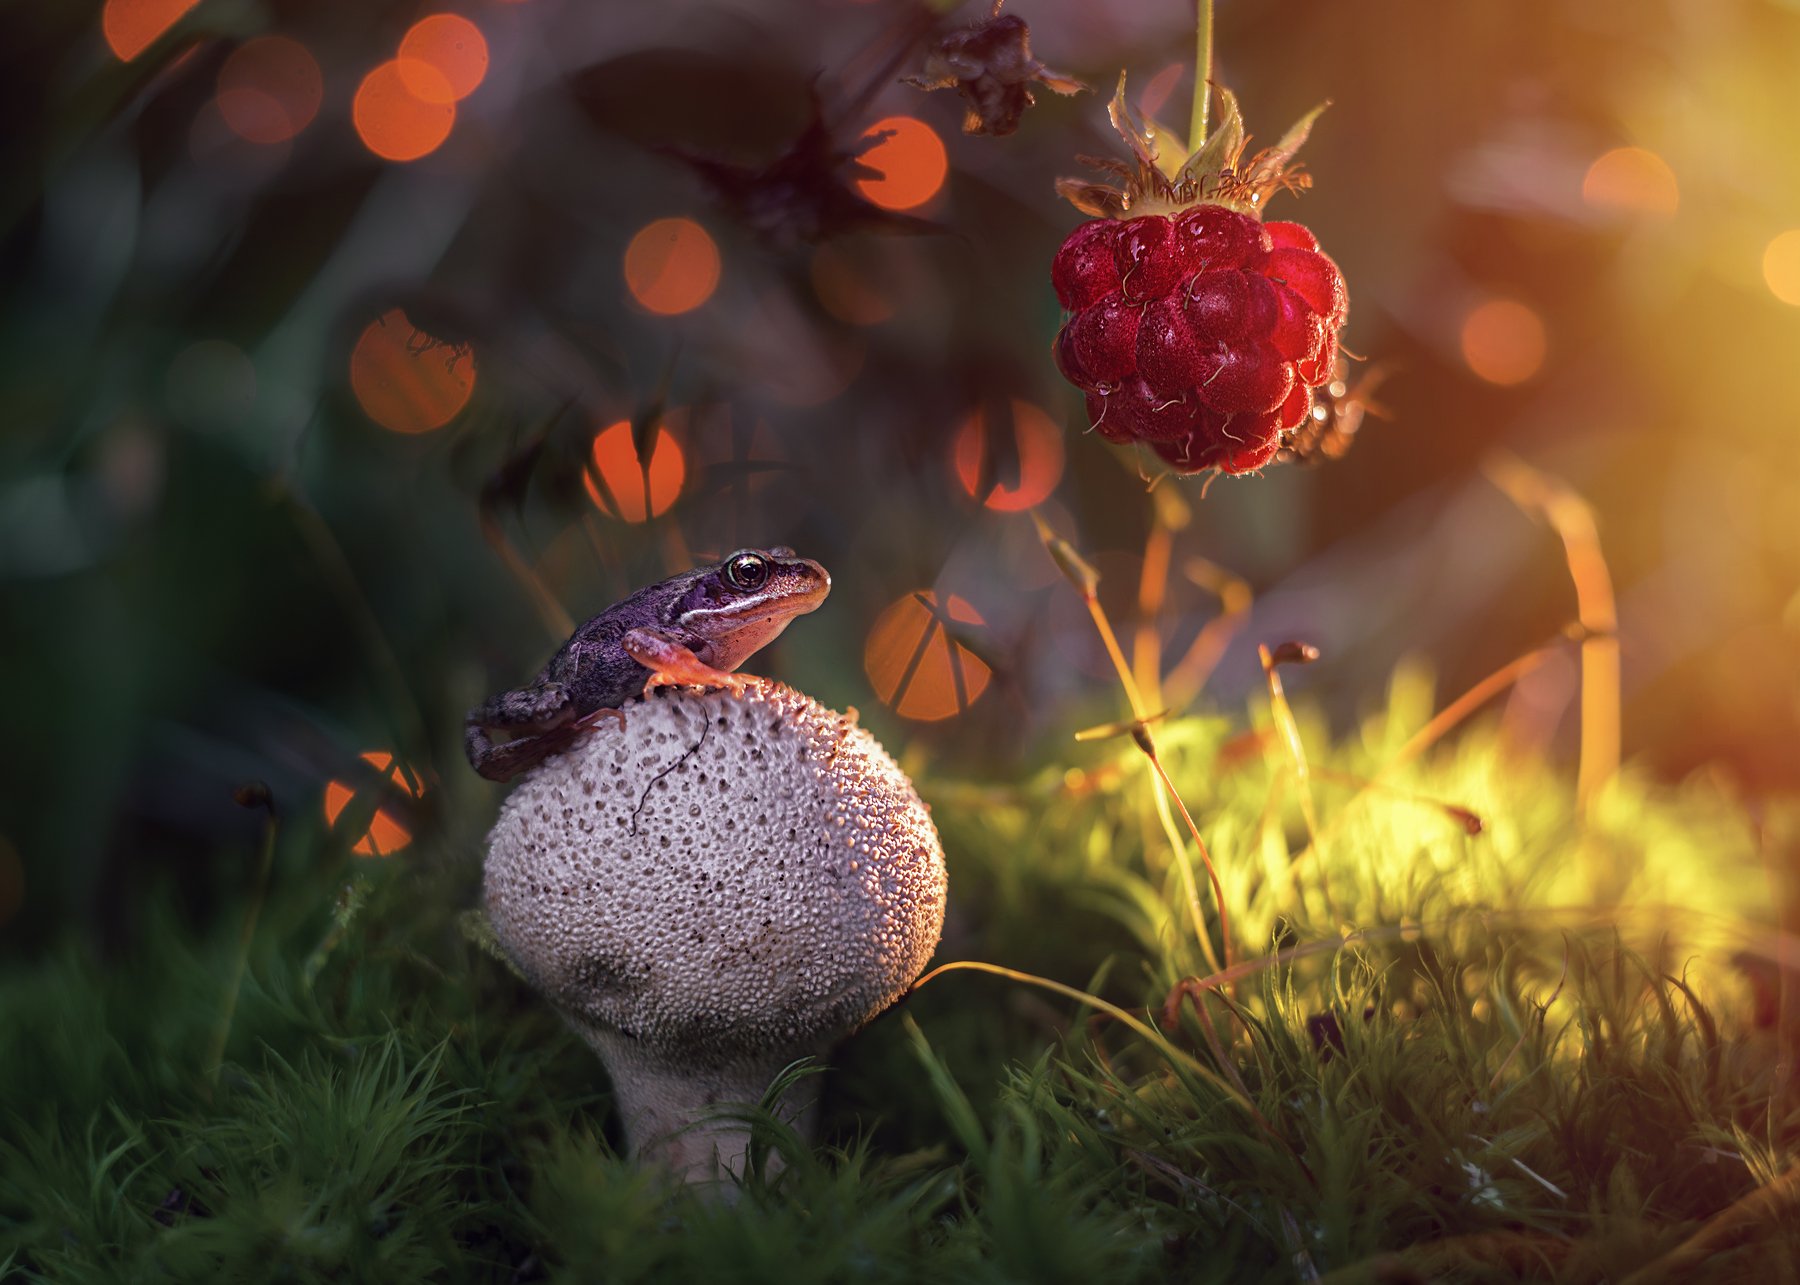 макро лягушка мох гриб боке свет солнце закат красота лес малина ягода, Анастасия Третьякова